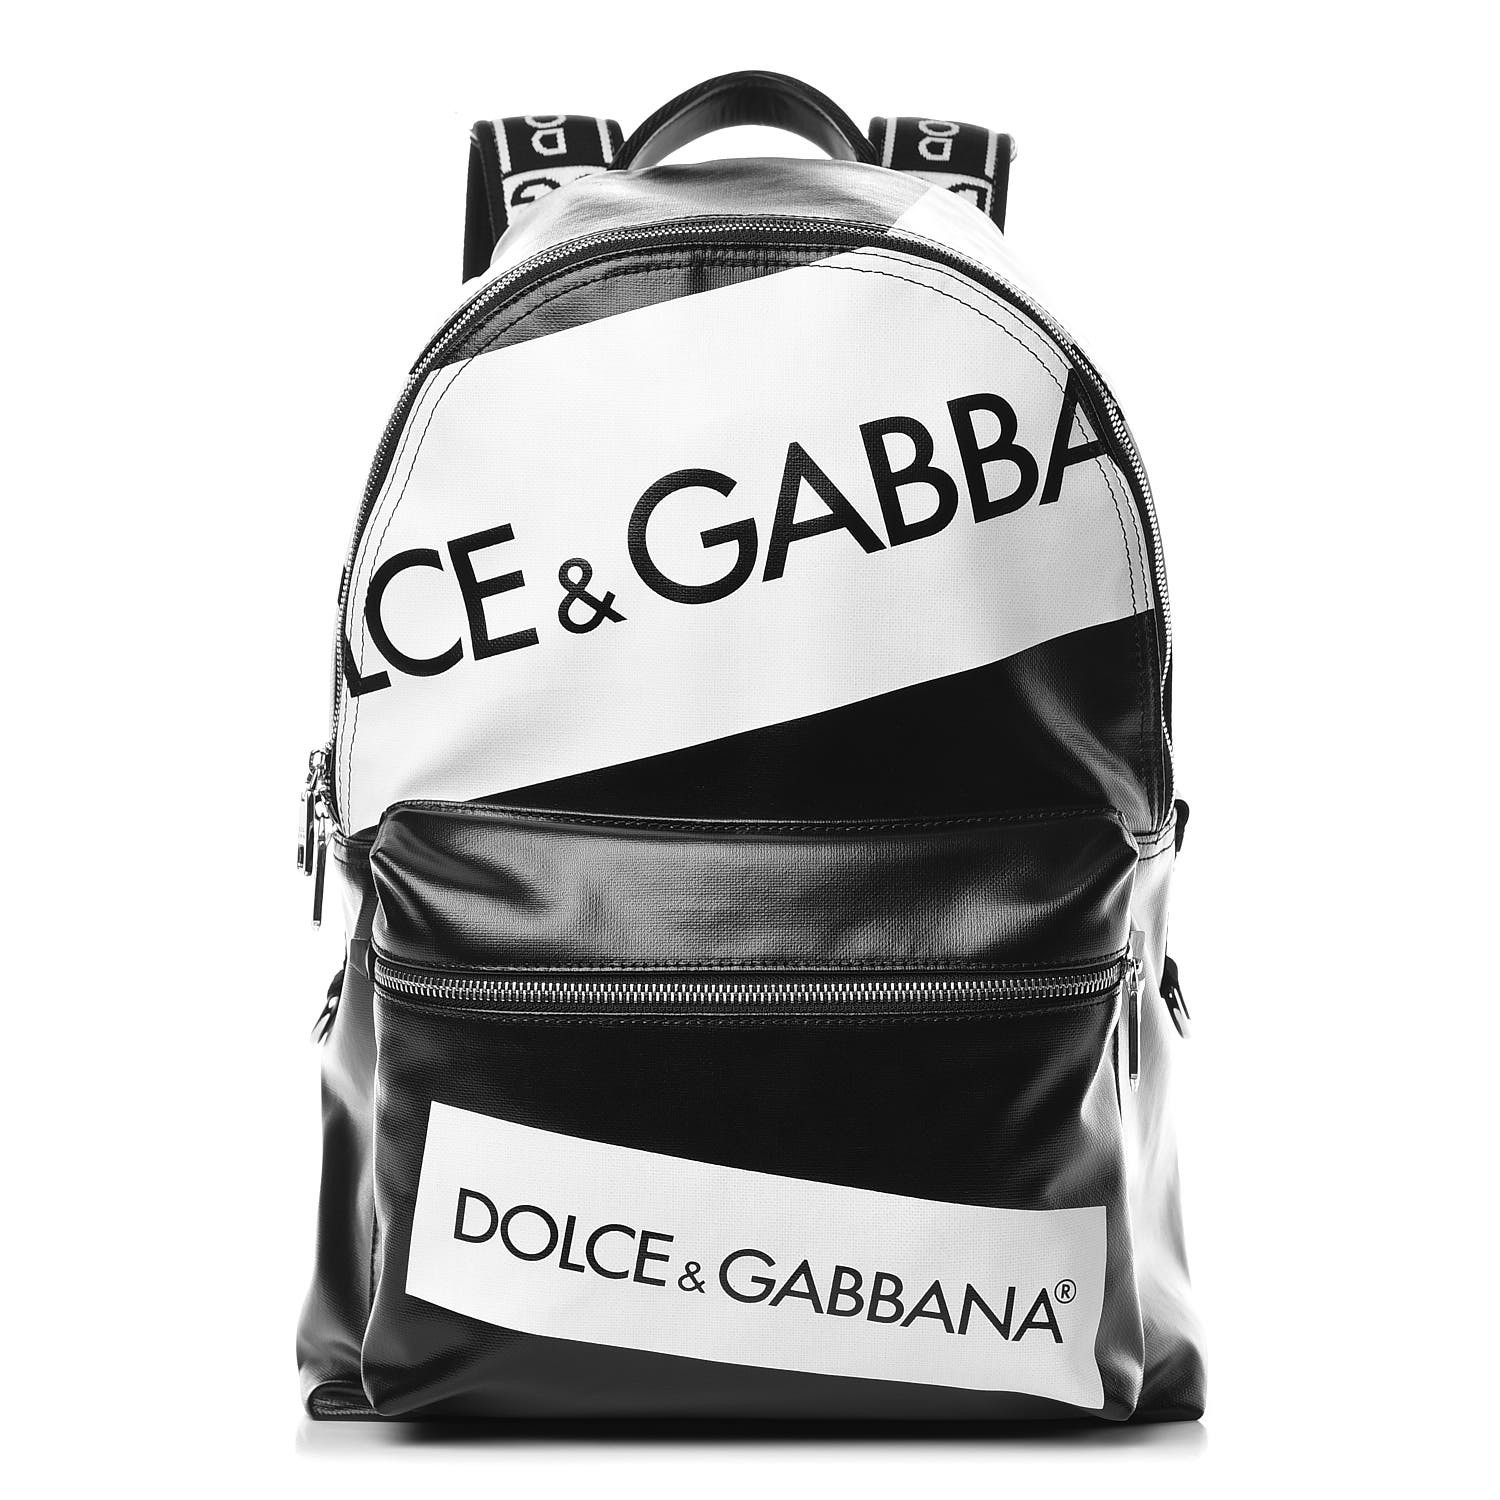 dolce gabbana backpack